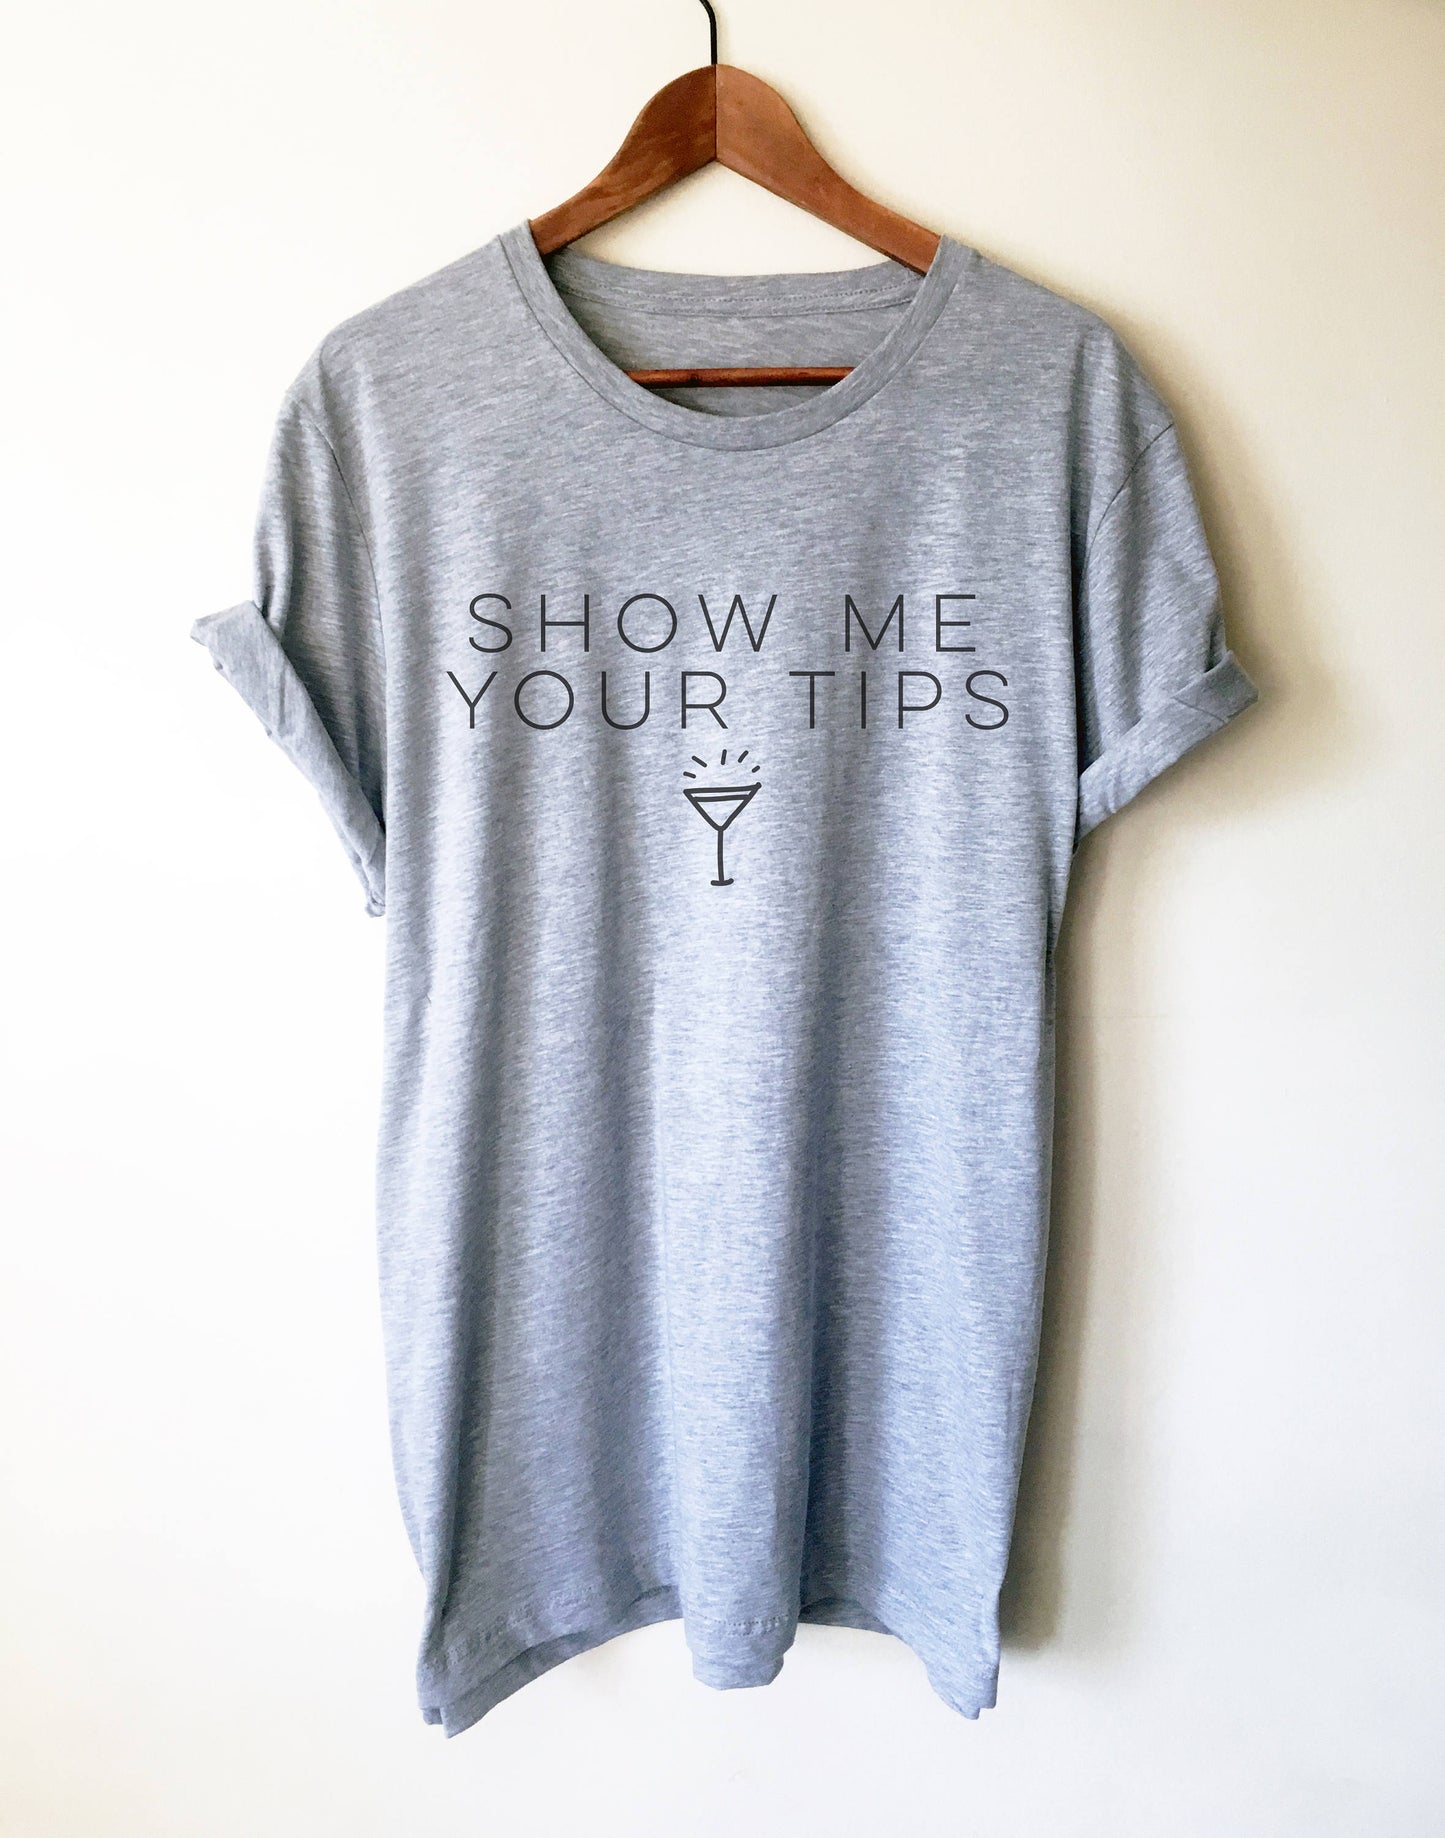 Show Me Your Tips Unisex Shirt - Waitress shirt | Waitress gift | Waiter shirt | Gift for waitress | Bartender